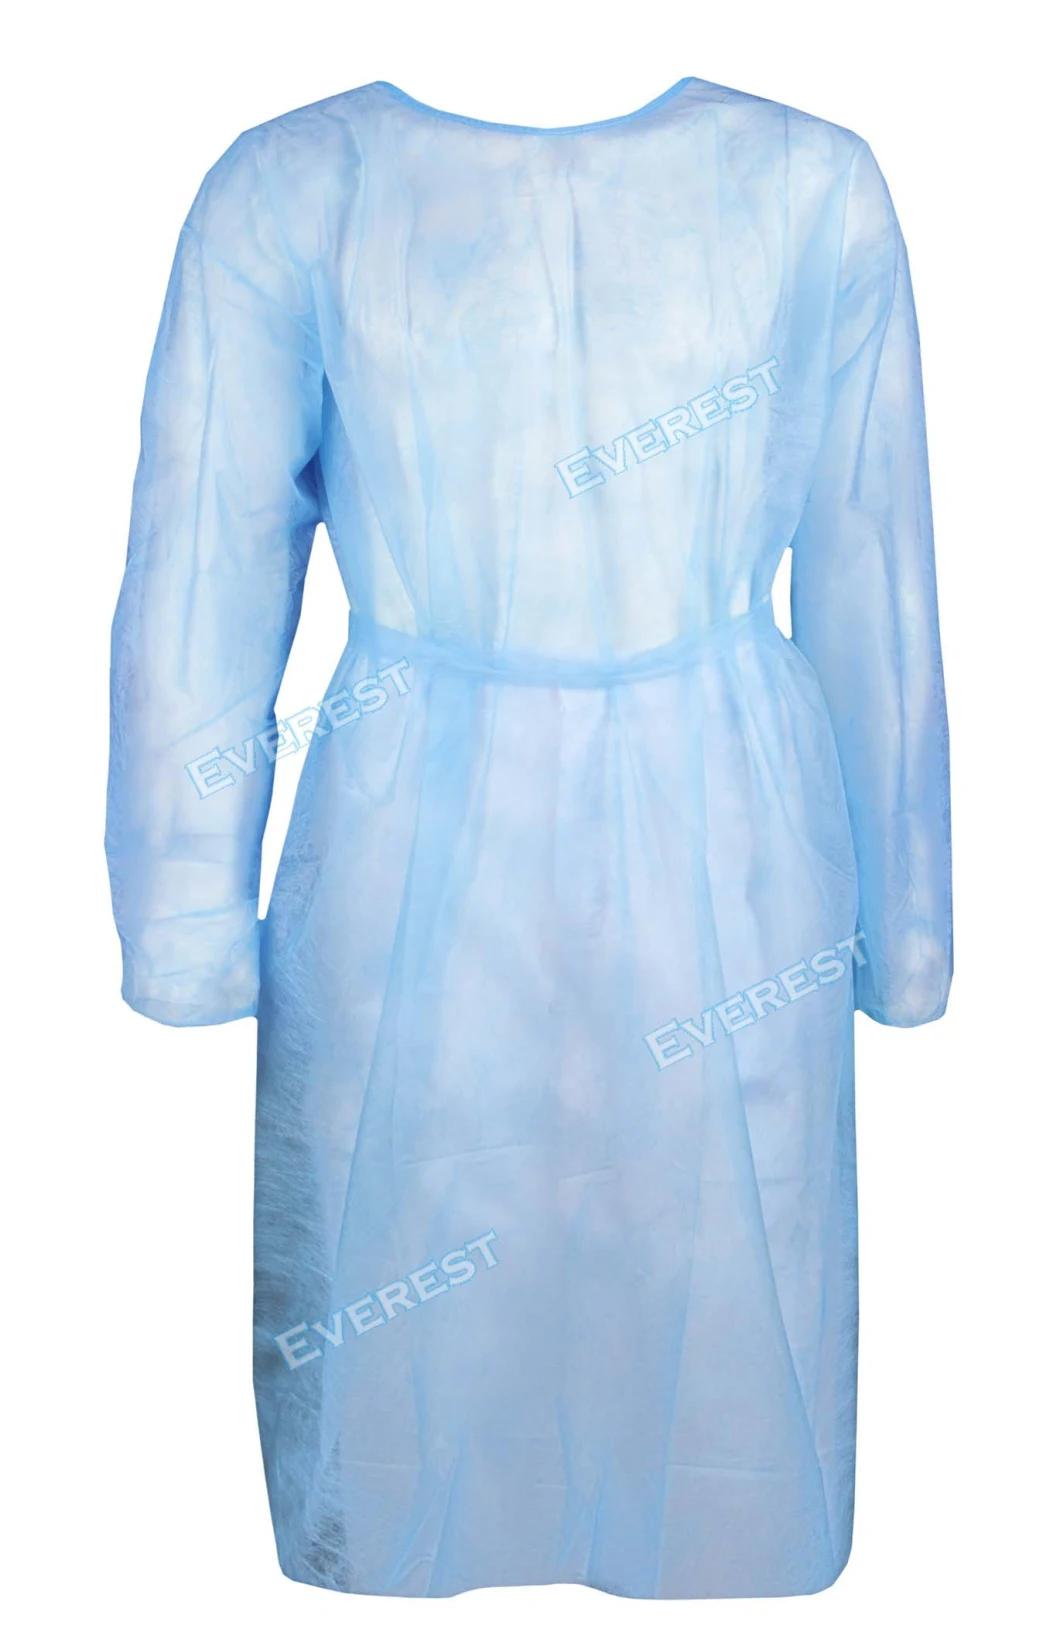 Disposable Non-Woven Isolation Surgeon Gown